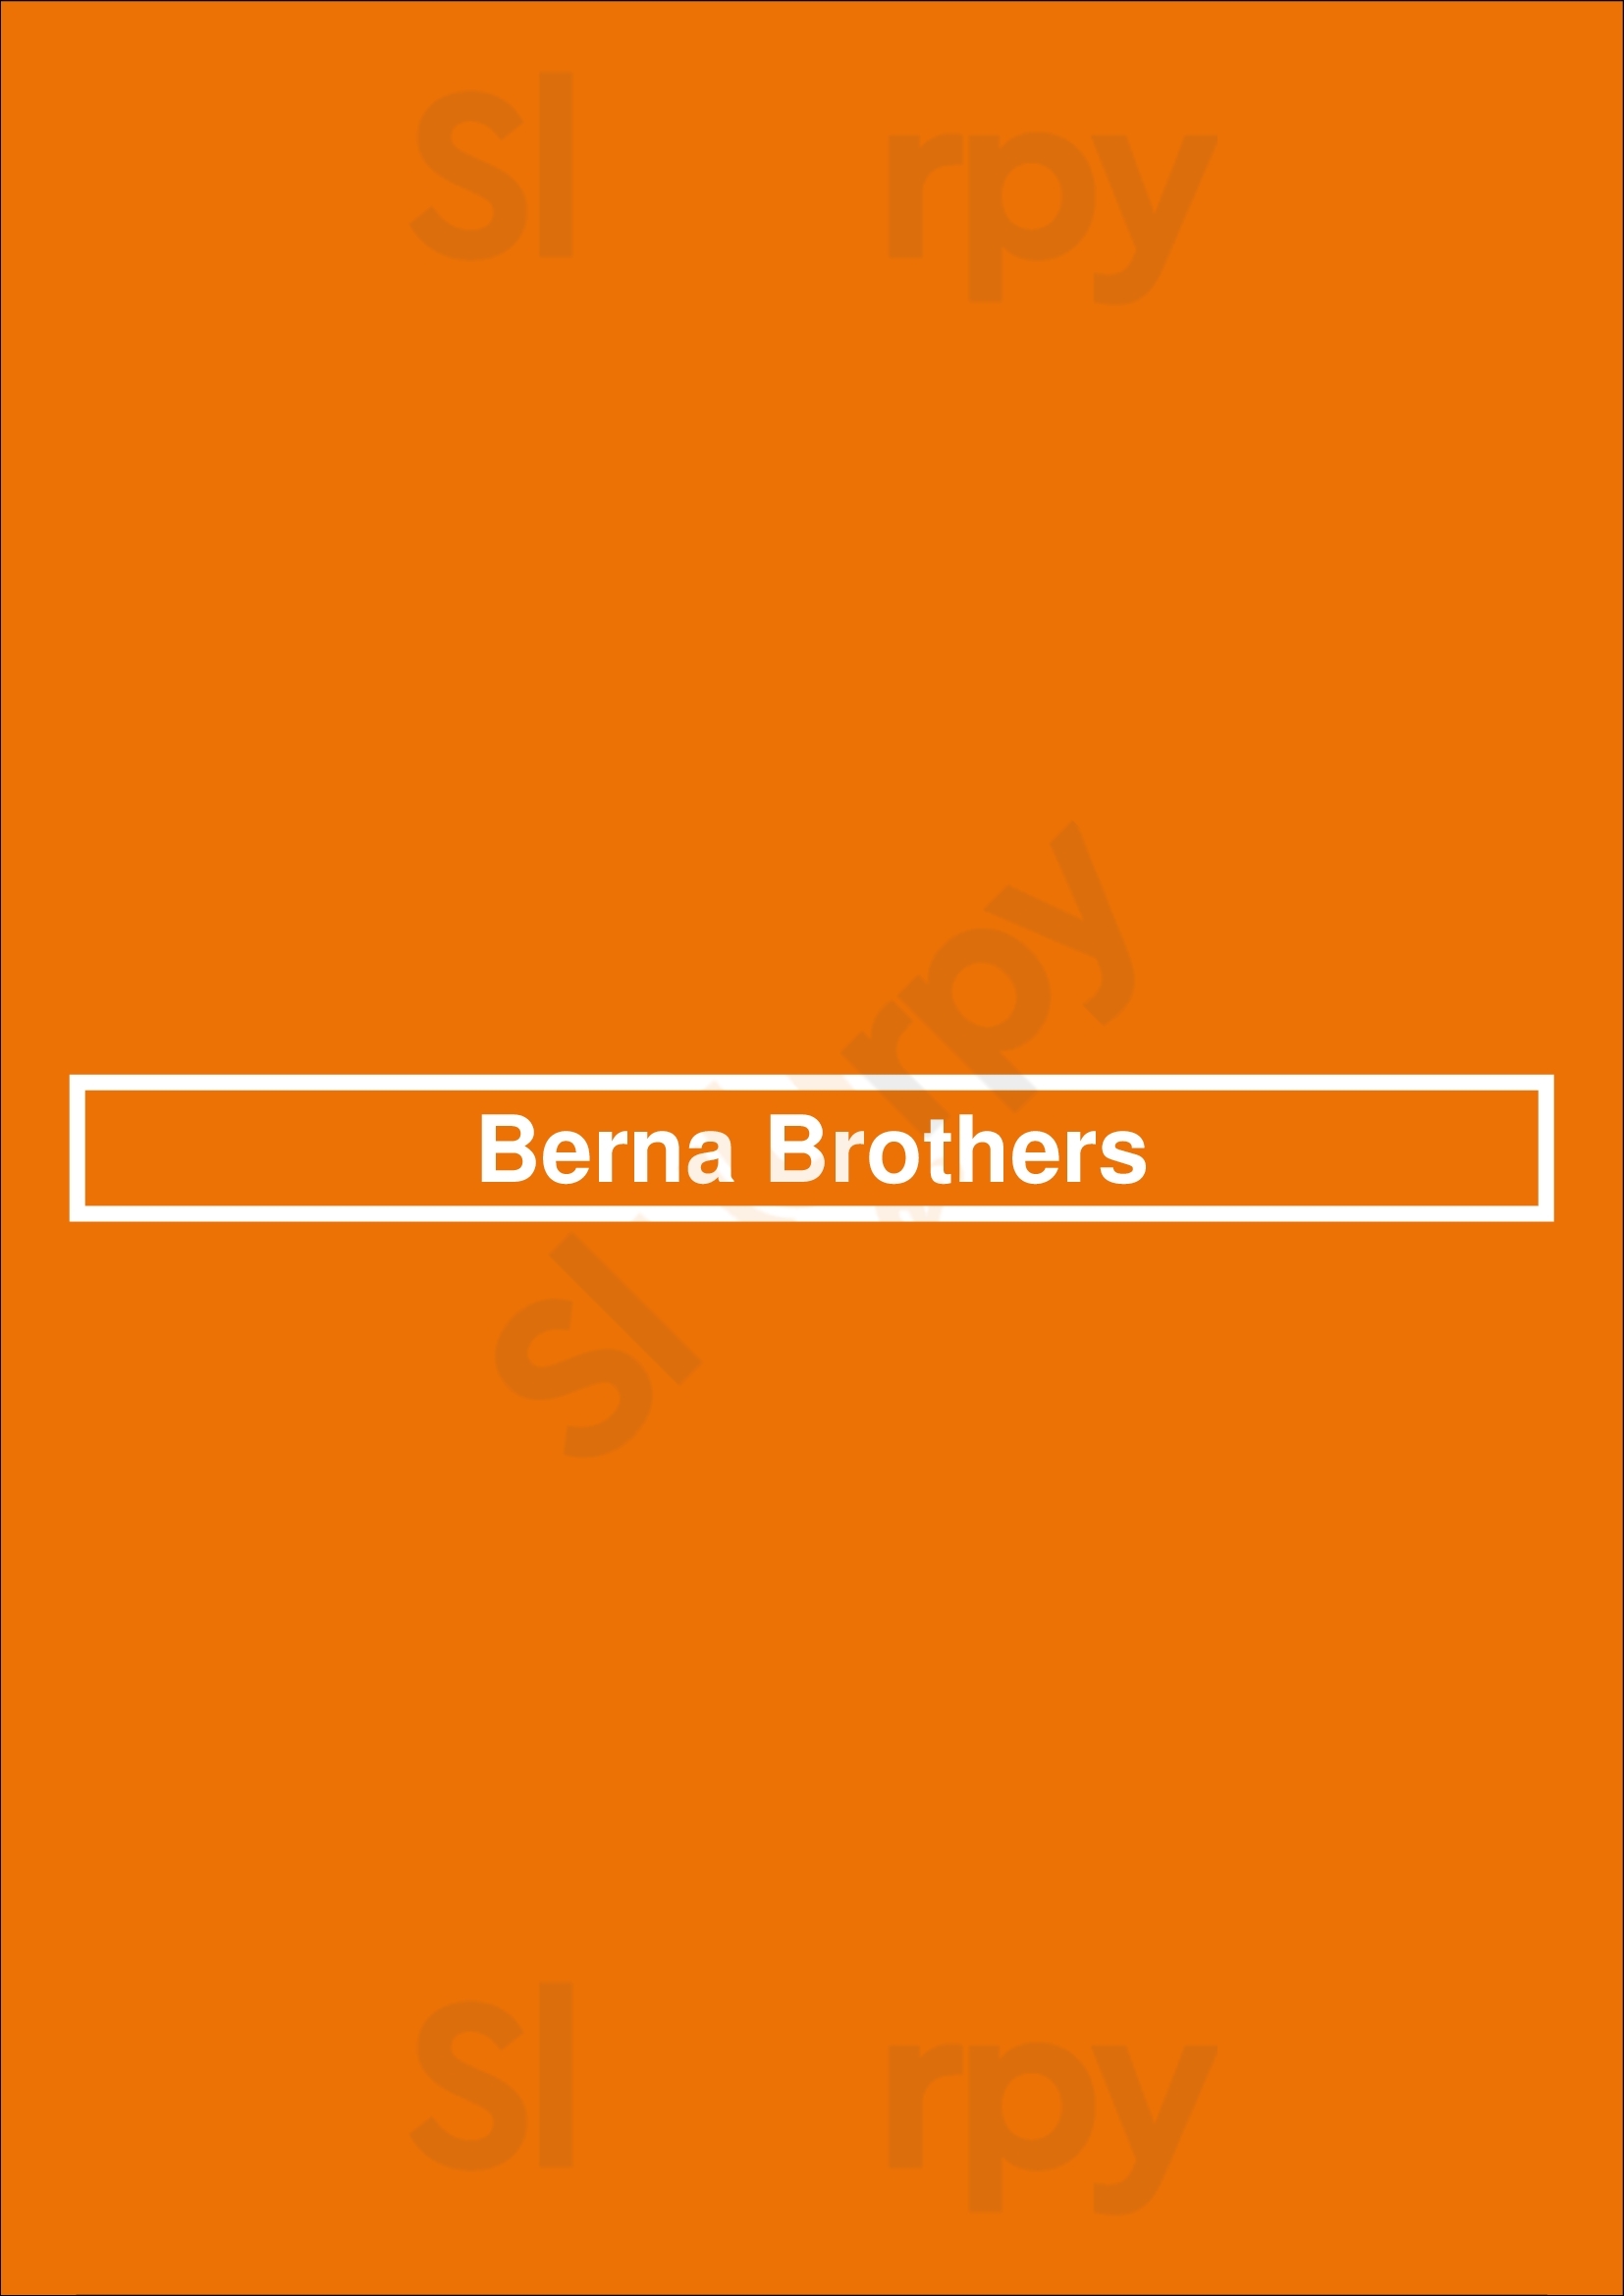 Berna Brothers Buenos Aires Menu - 1